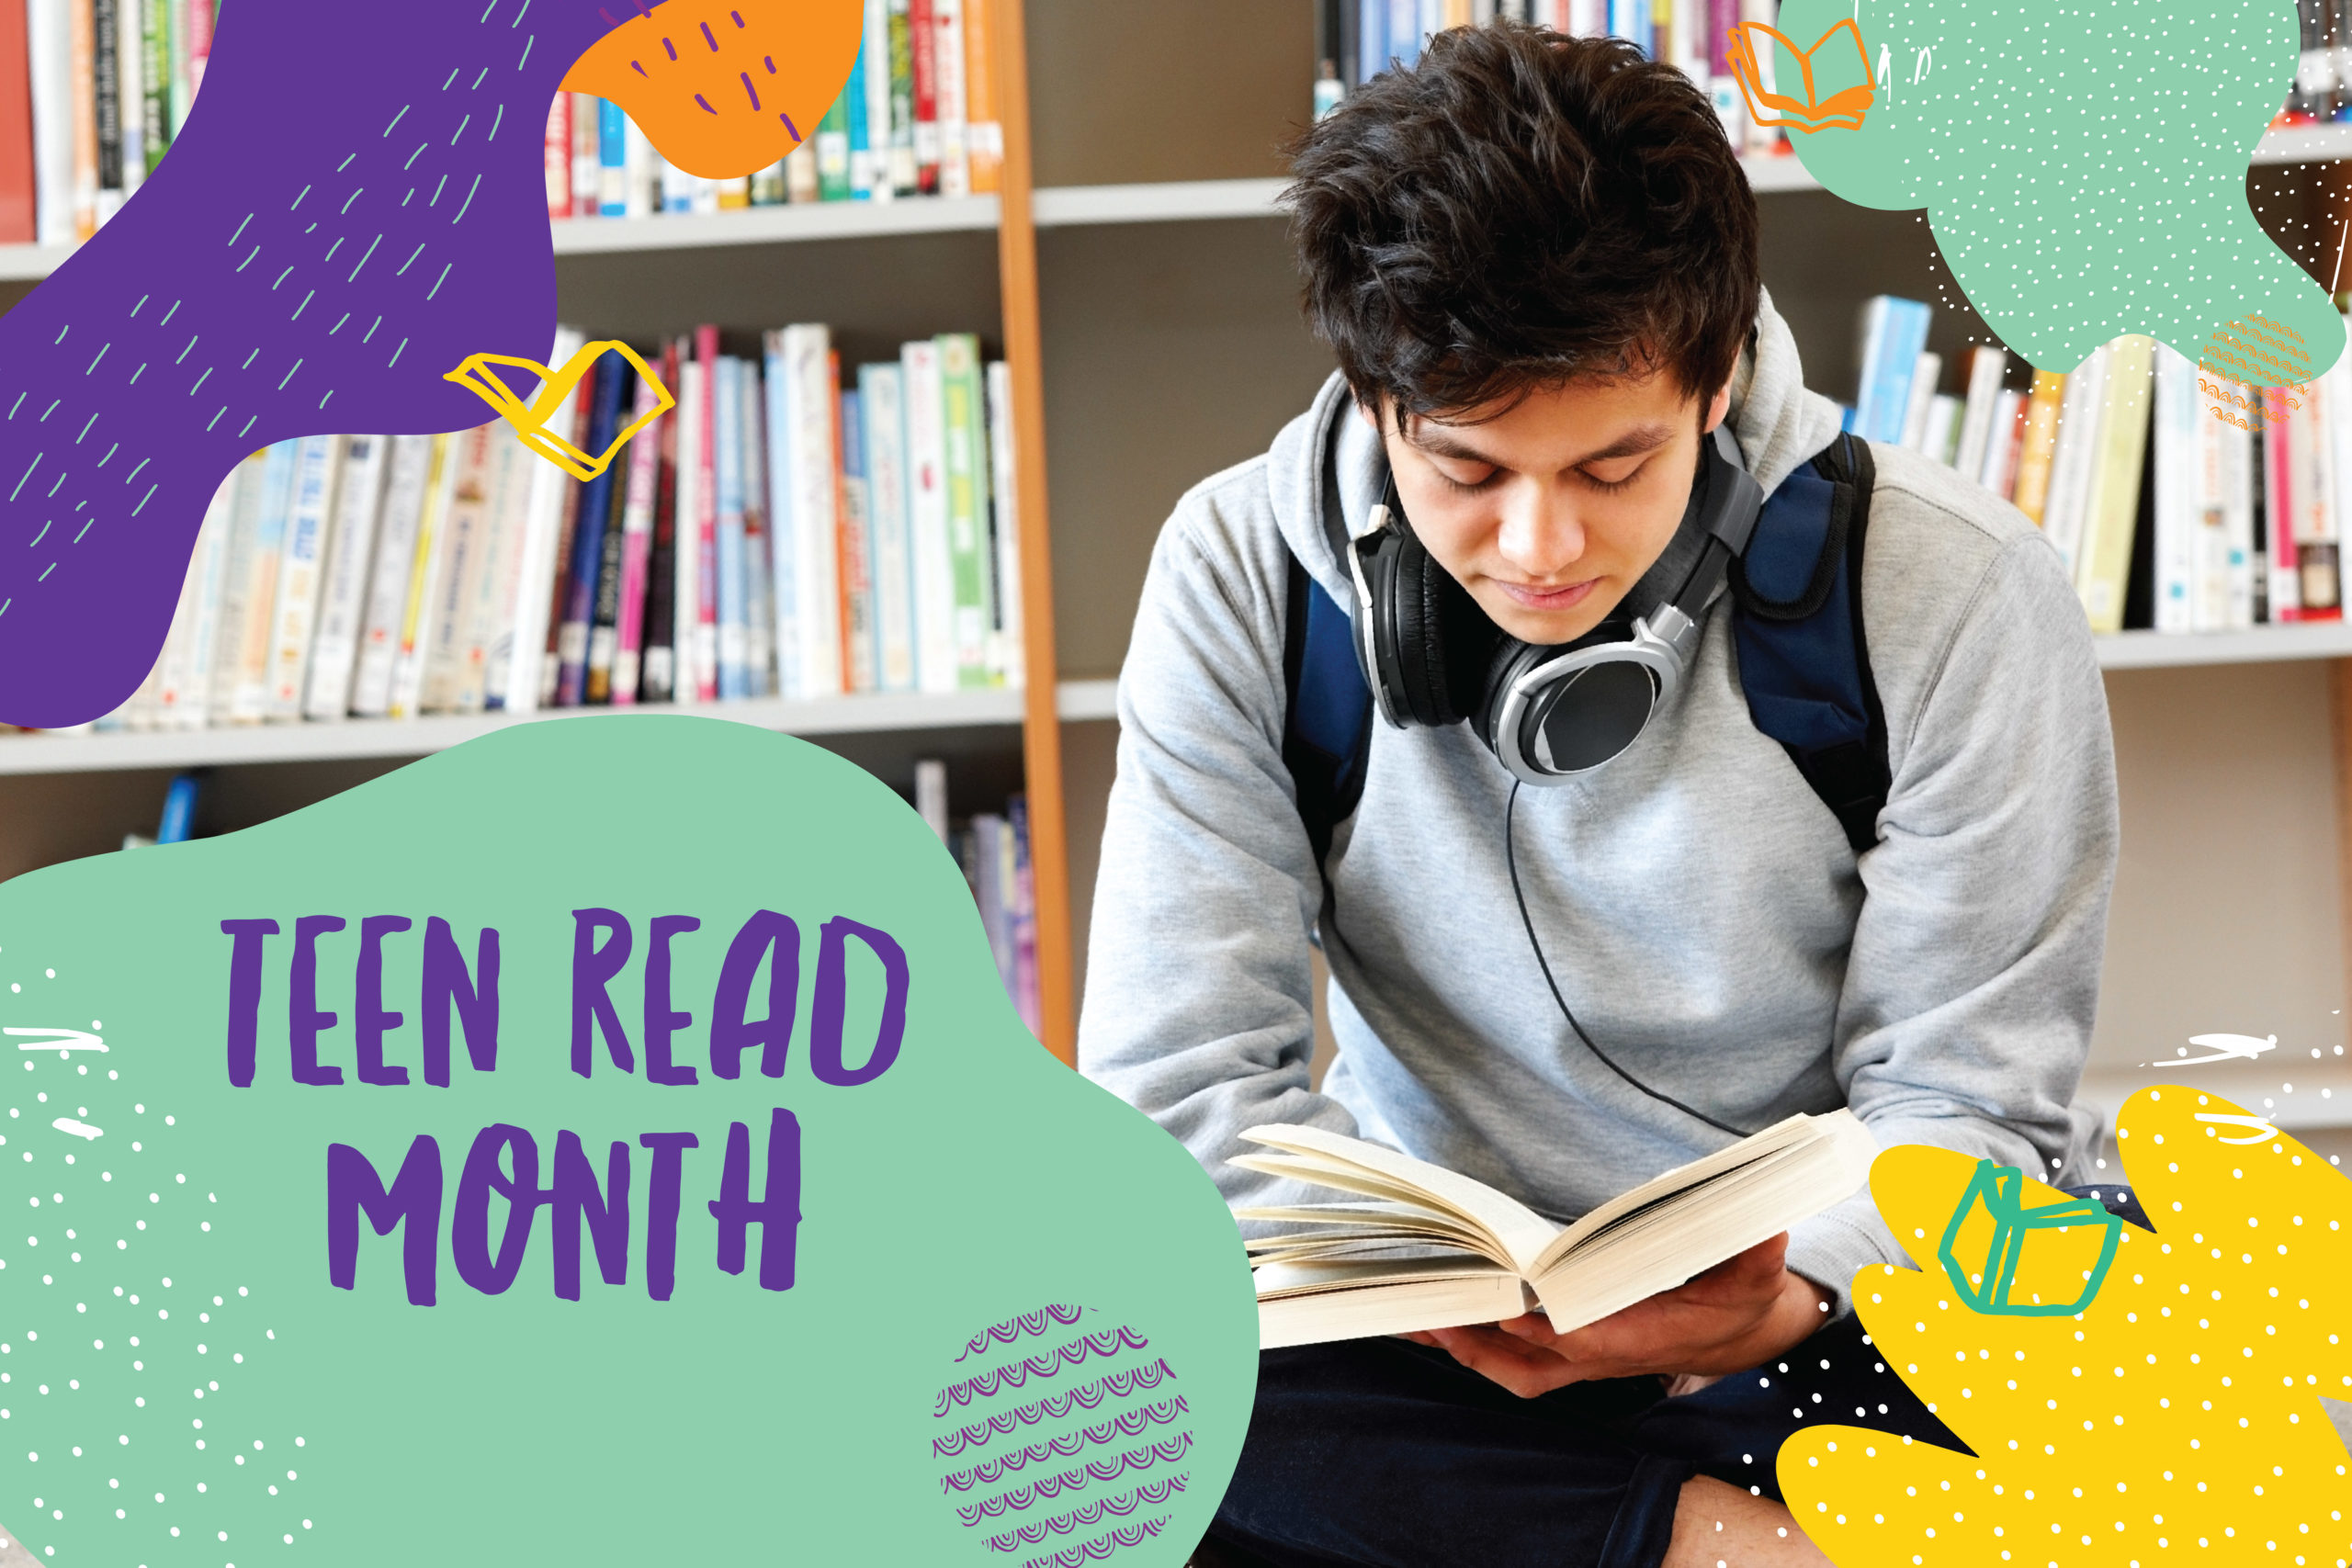 Teen Read month